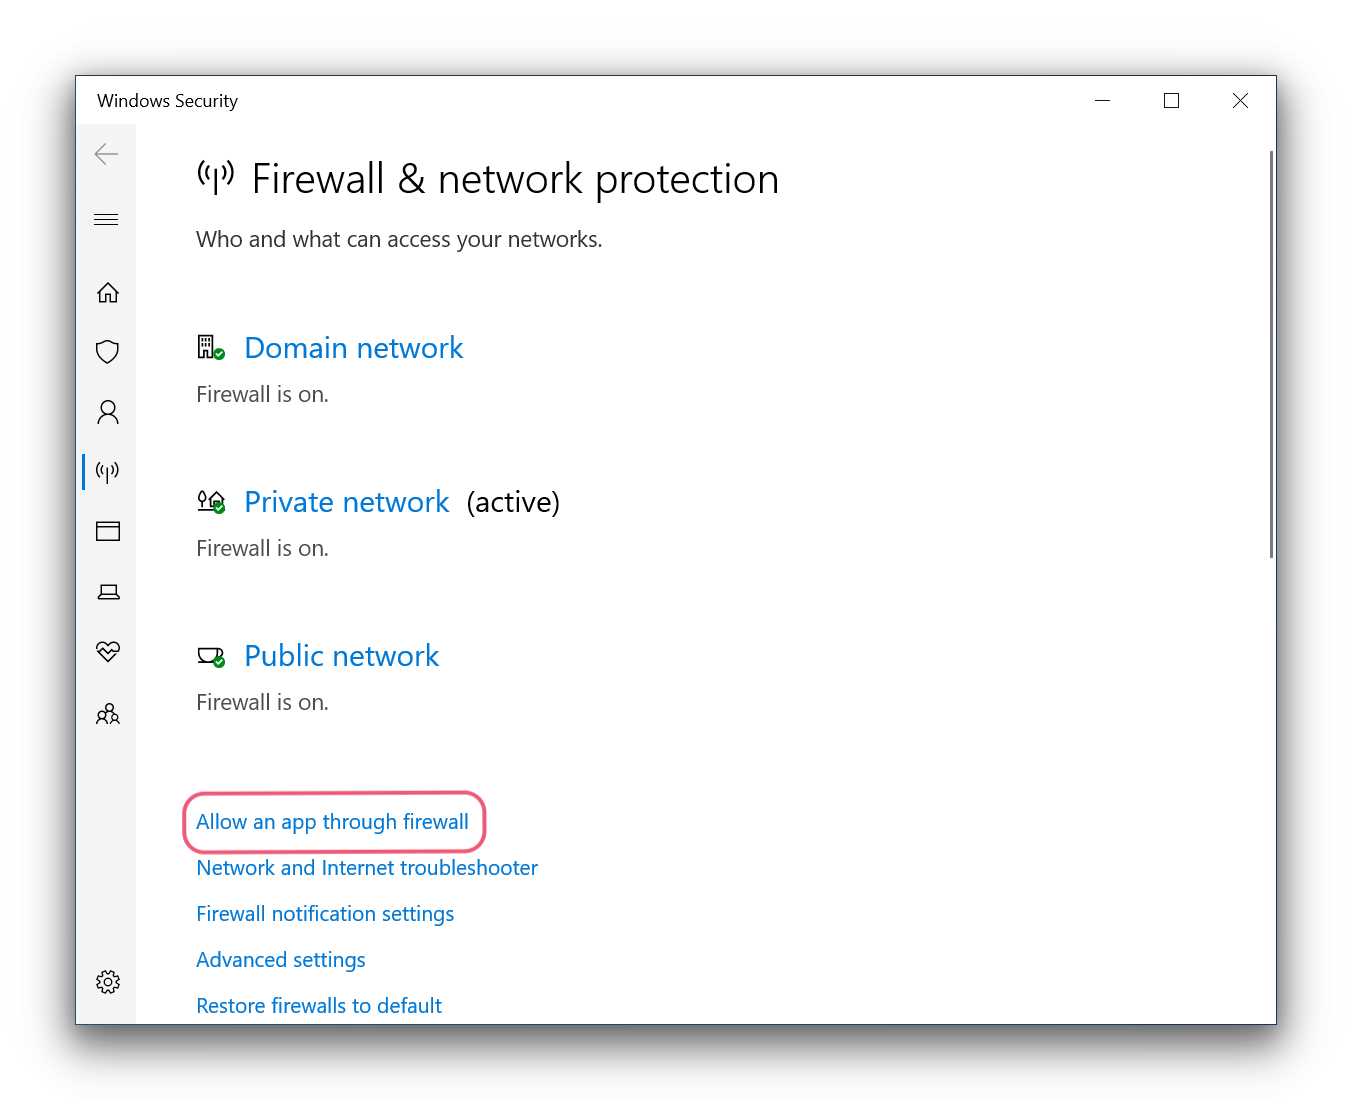 Windows Security's firewall settings